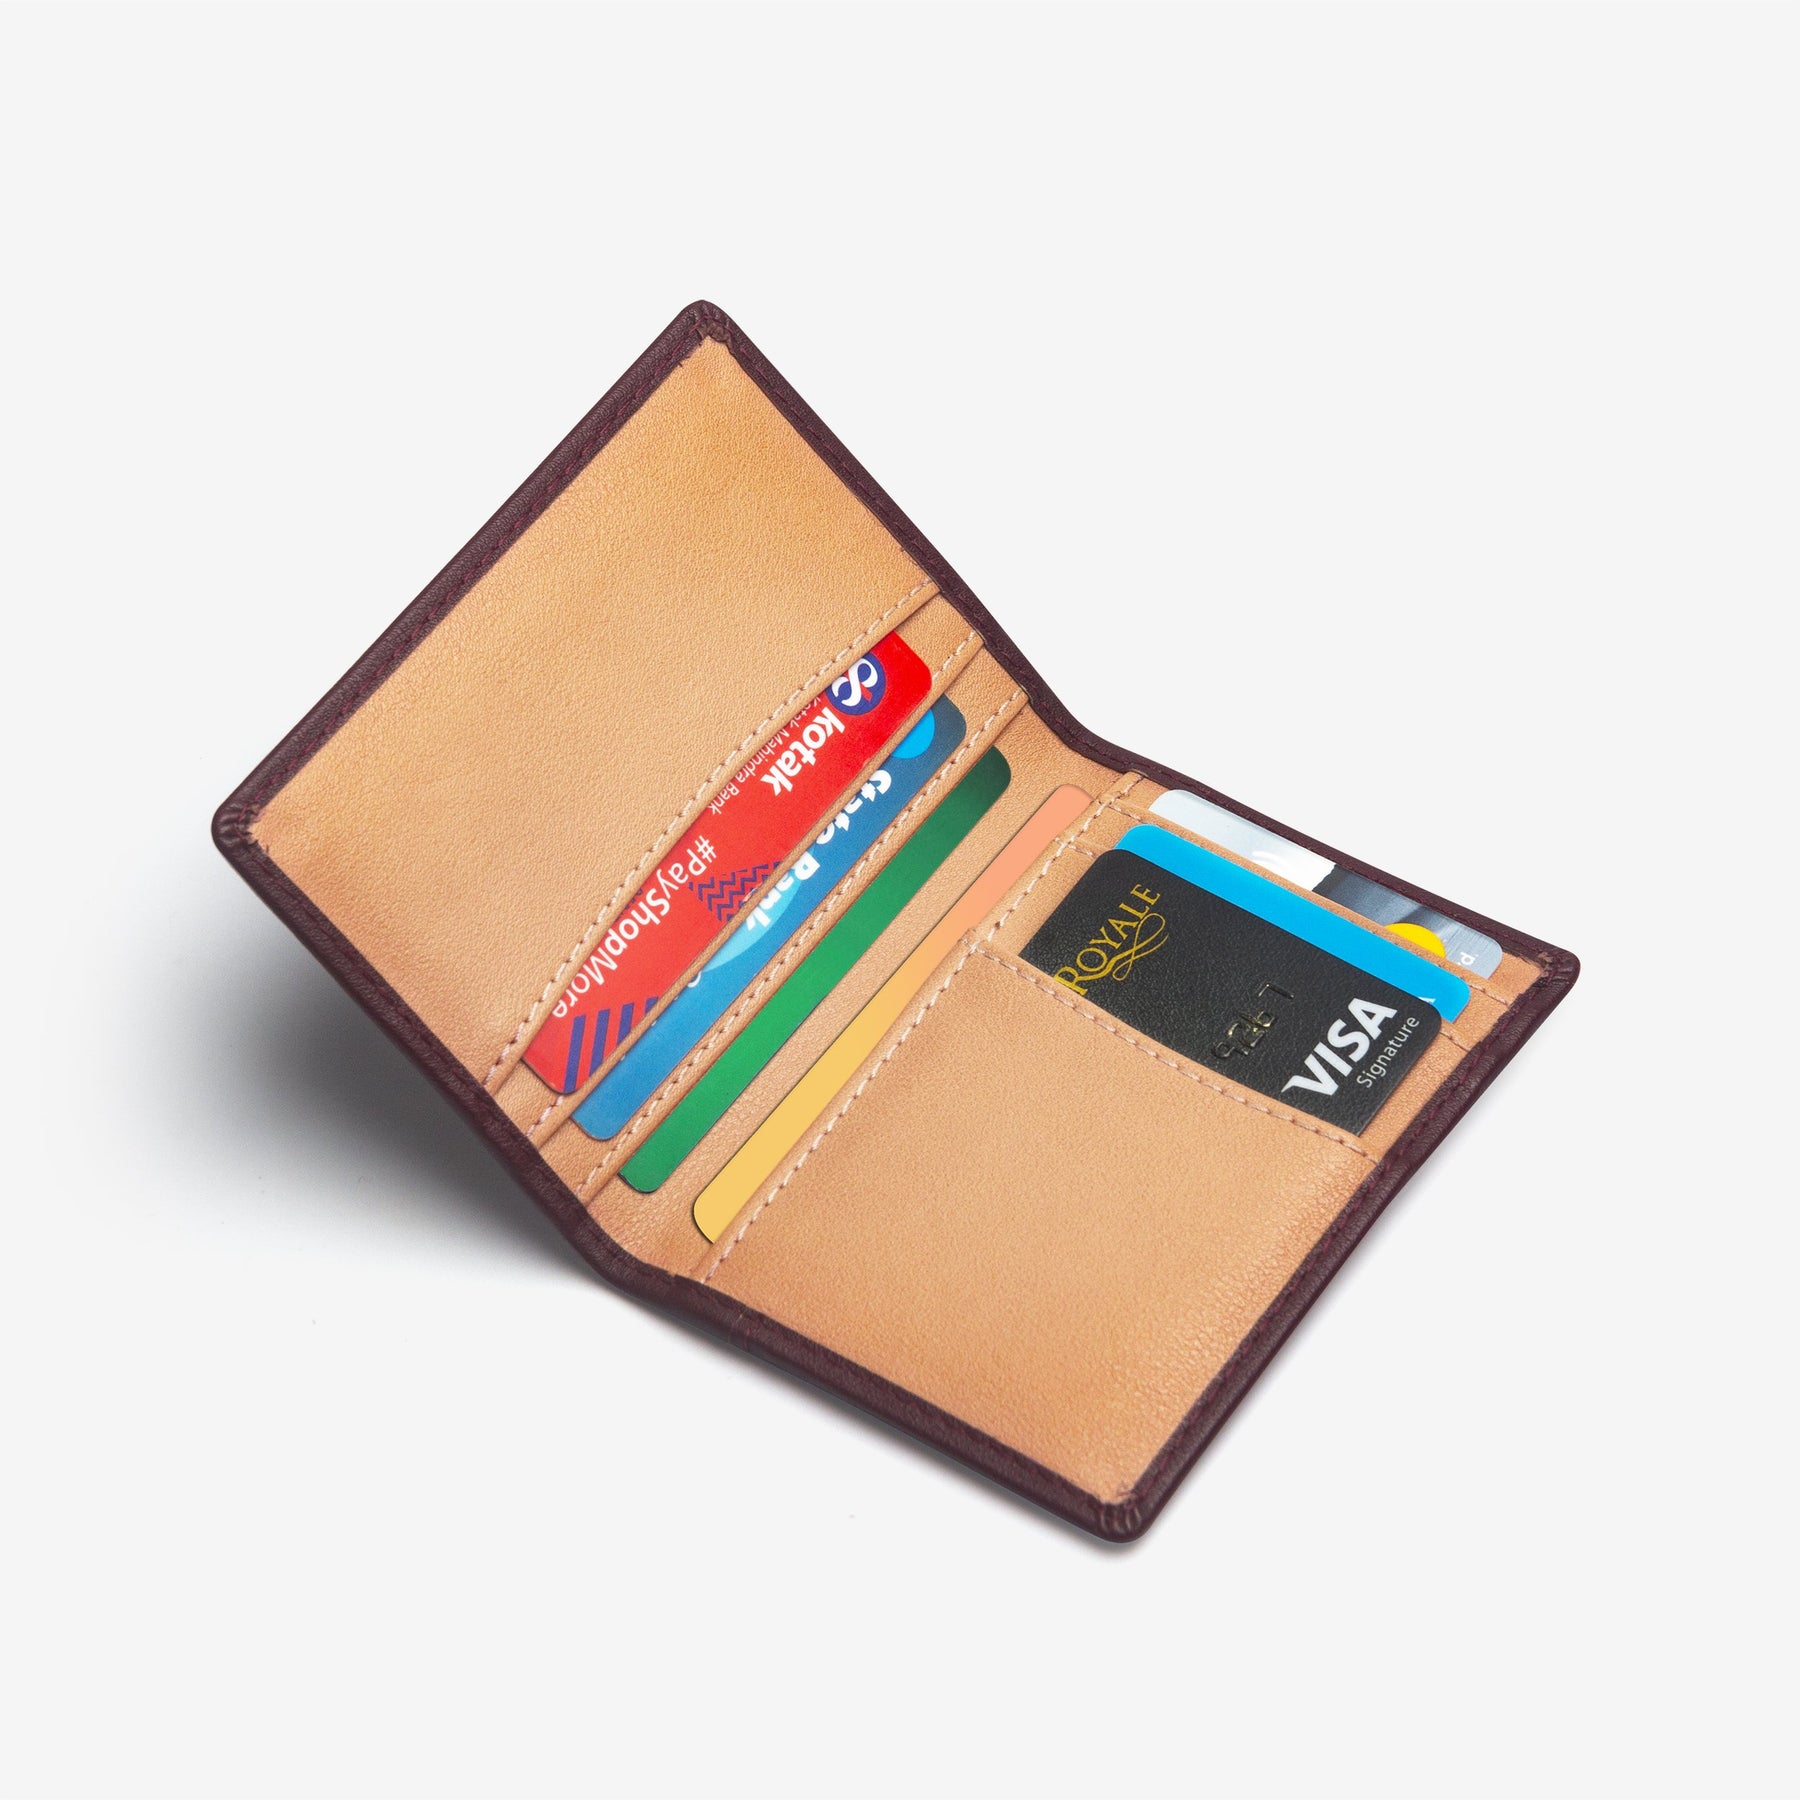  Personalized Card Case. Monogram Card Holder. Credit